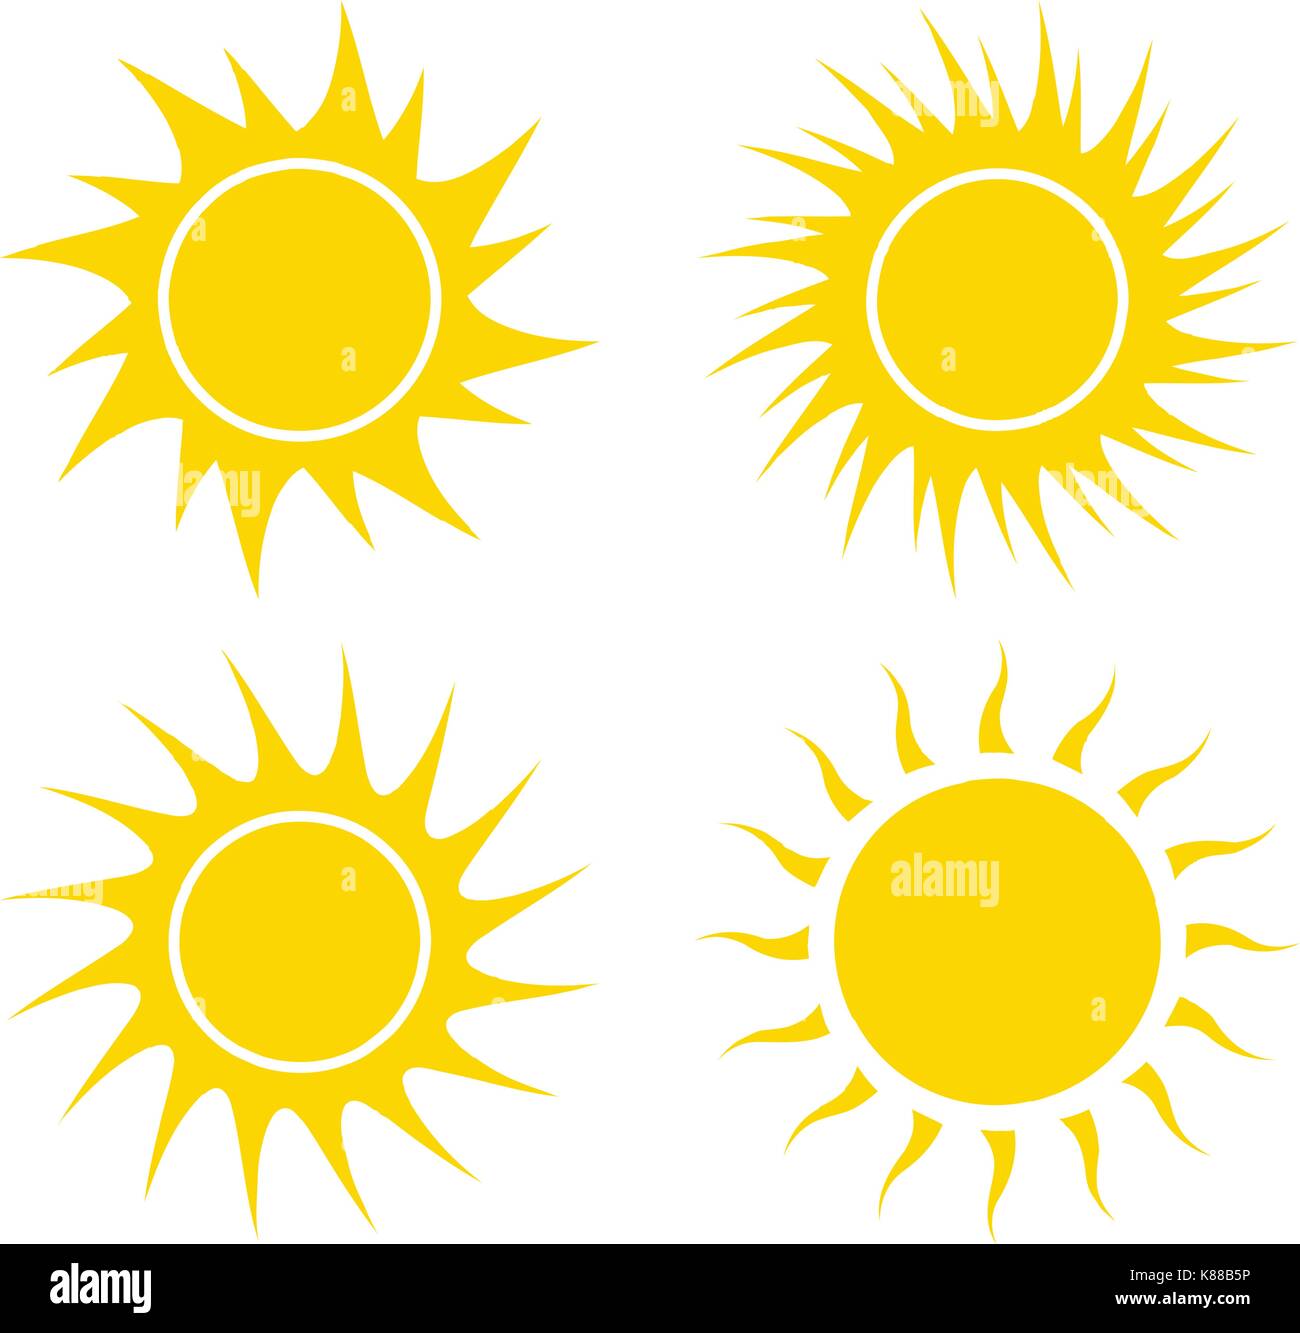 Sun Vector Cartoon Vector Logo For Web Design Vector Illustration Stock  Illustration - Download Image Now - iStock